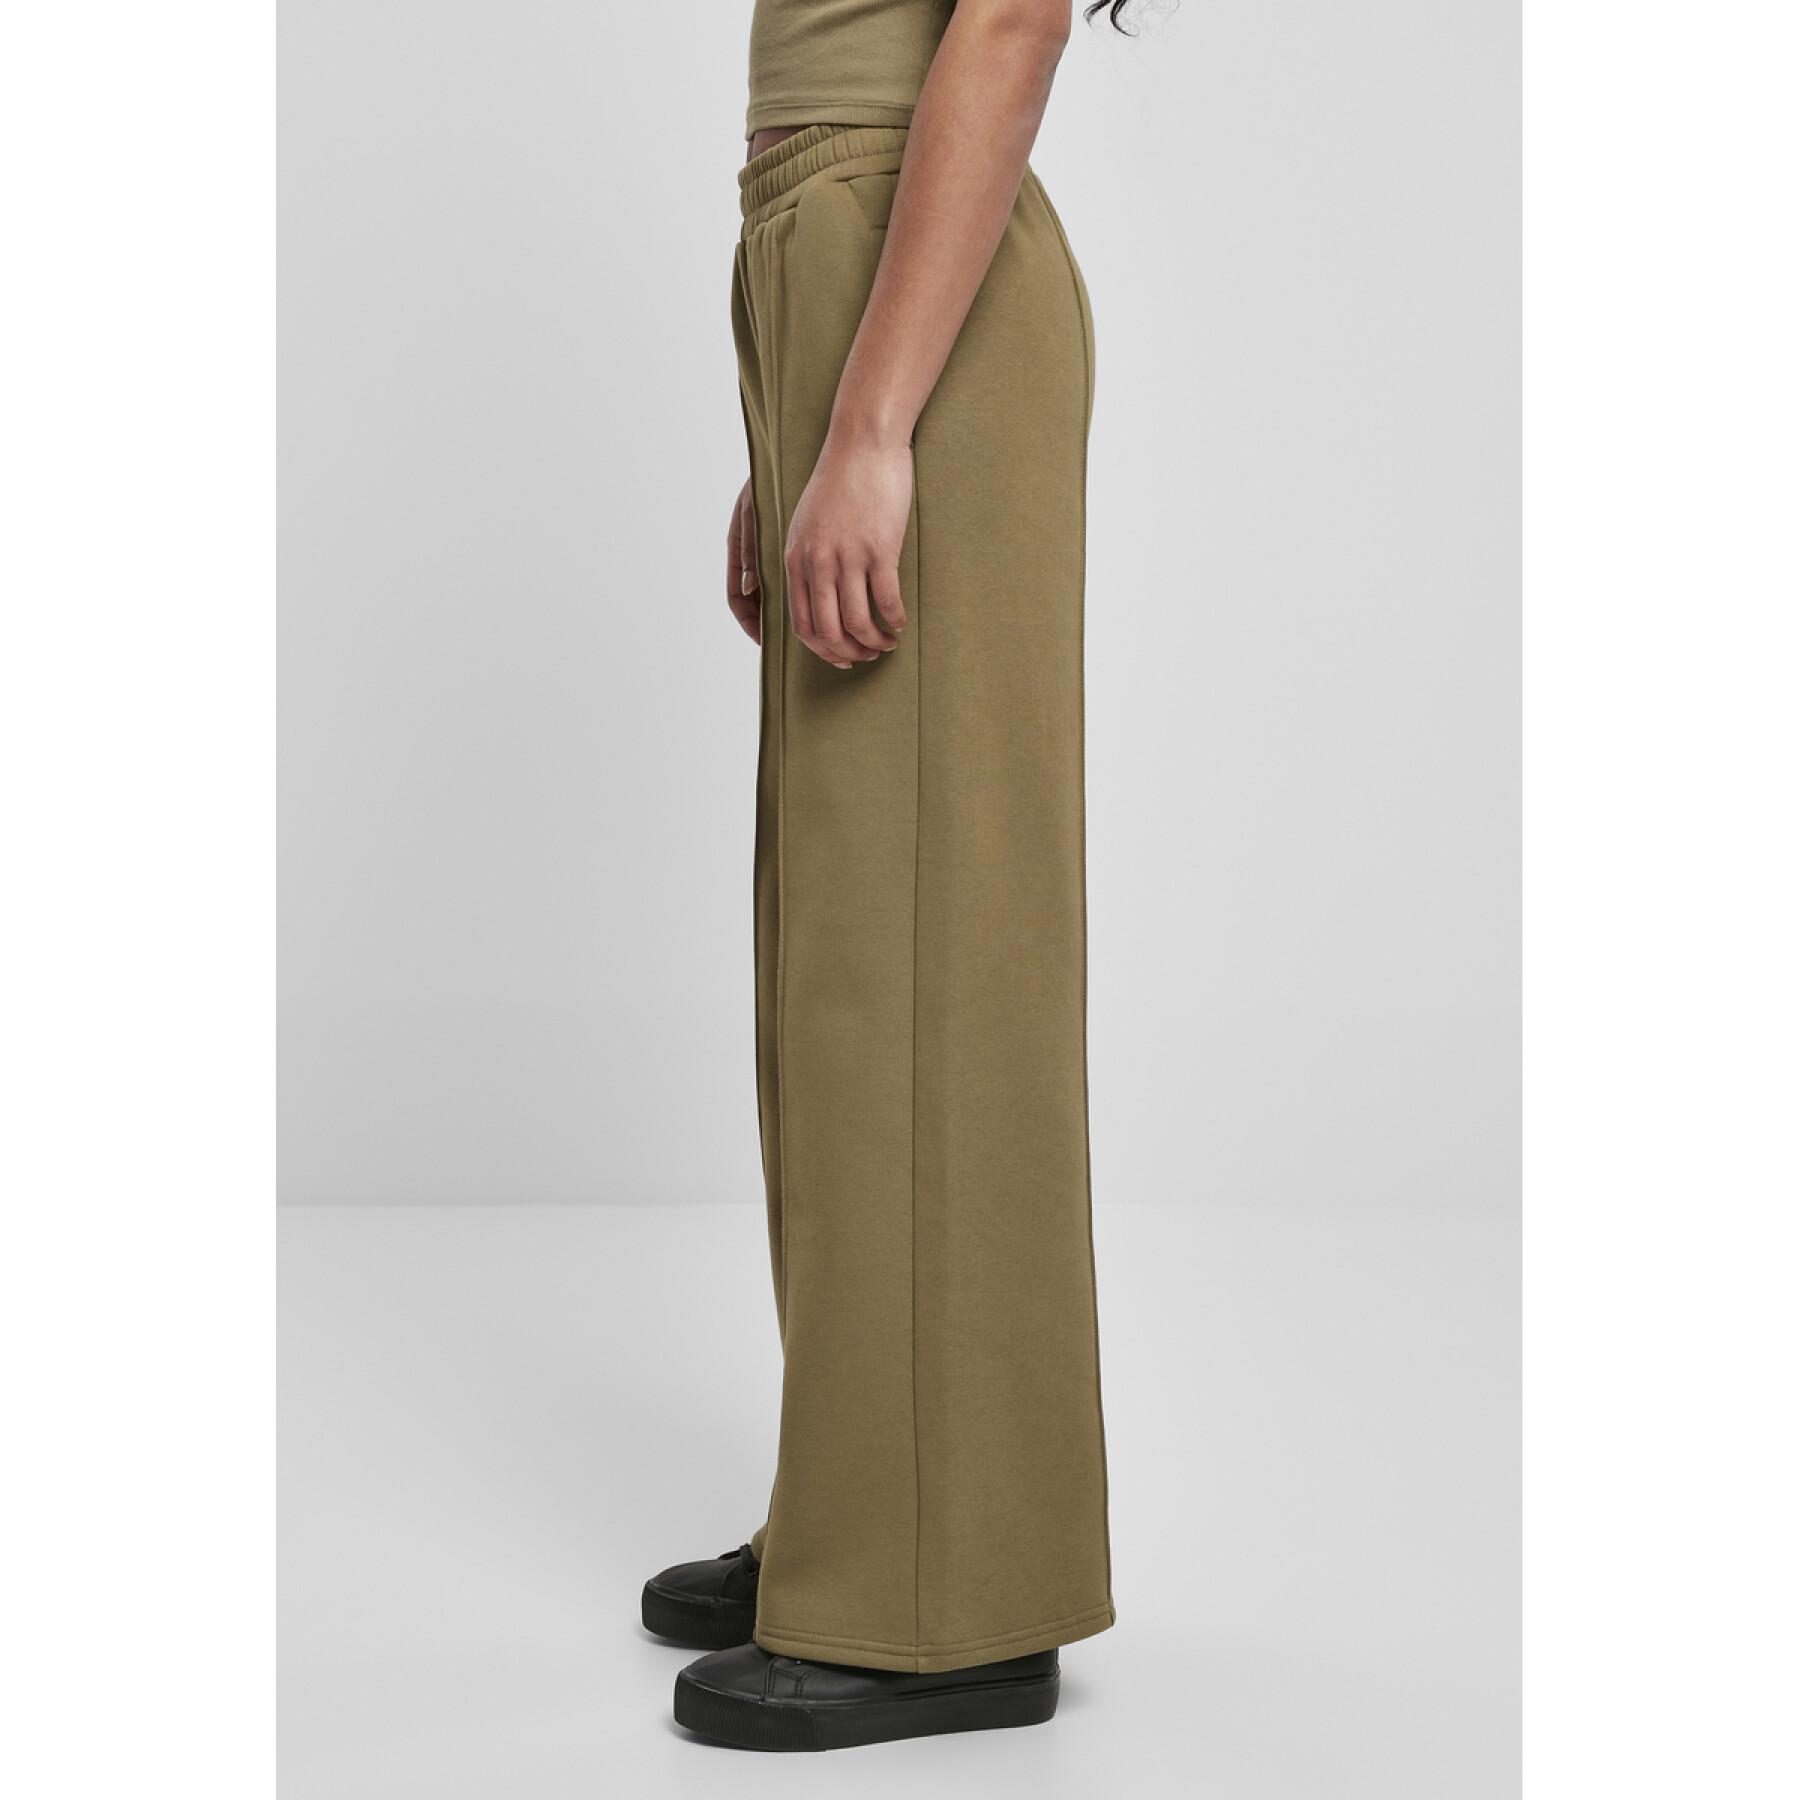 Pantalon femme Urban Classics straight pin tuck-grandes tailles